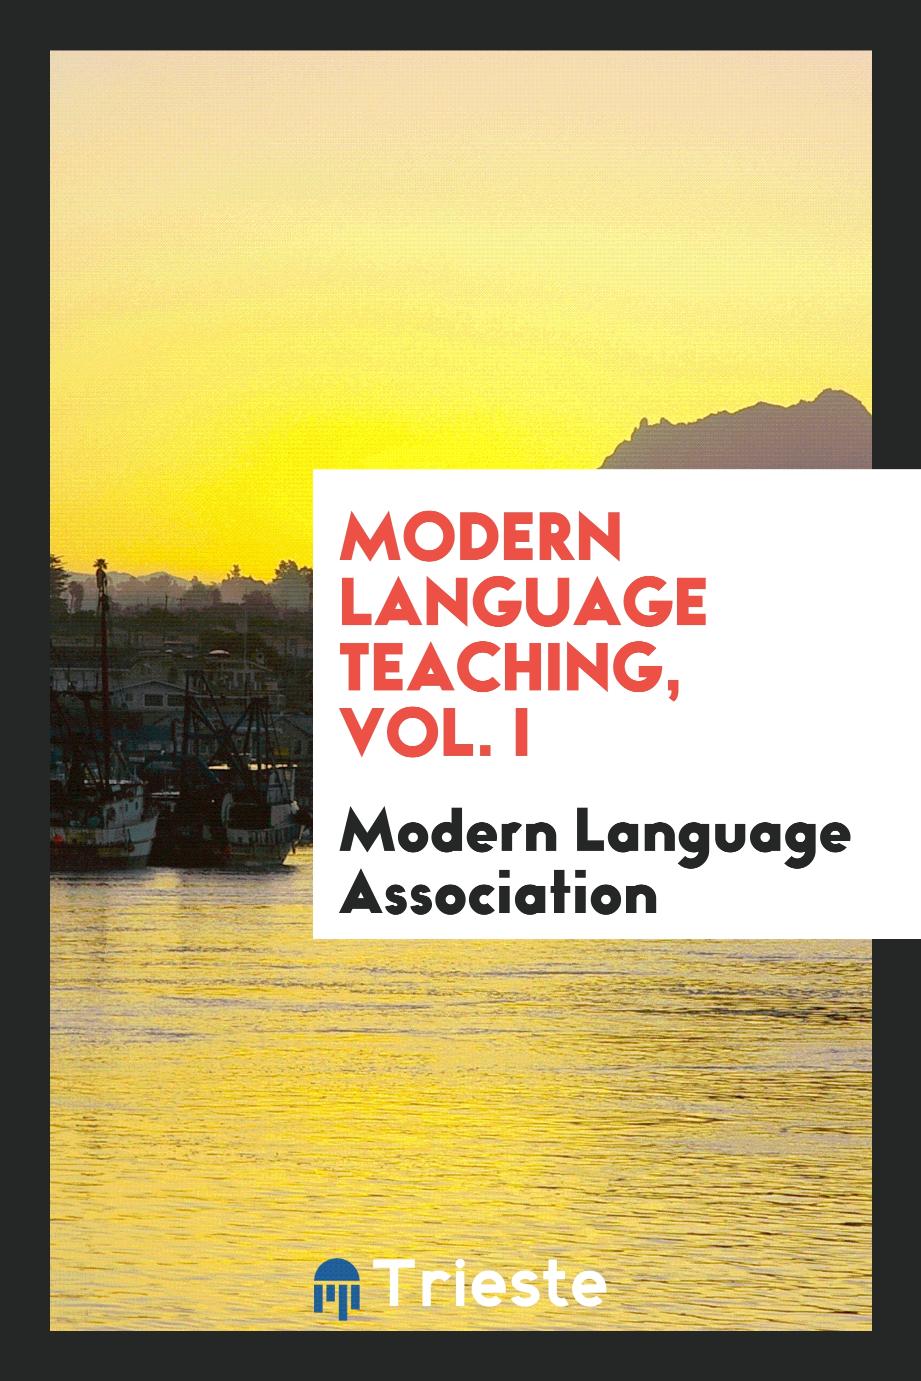 Modern language teaching, Vol. I